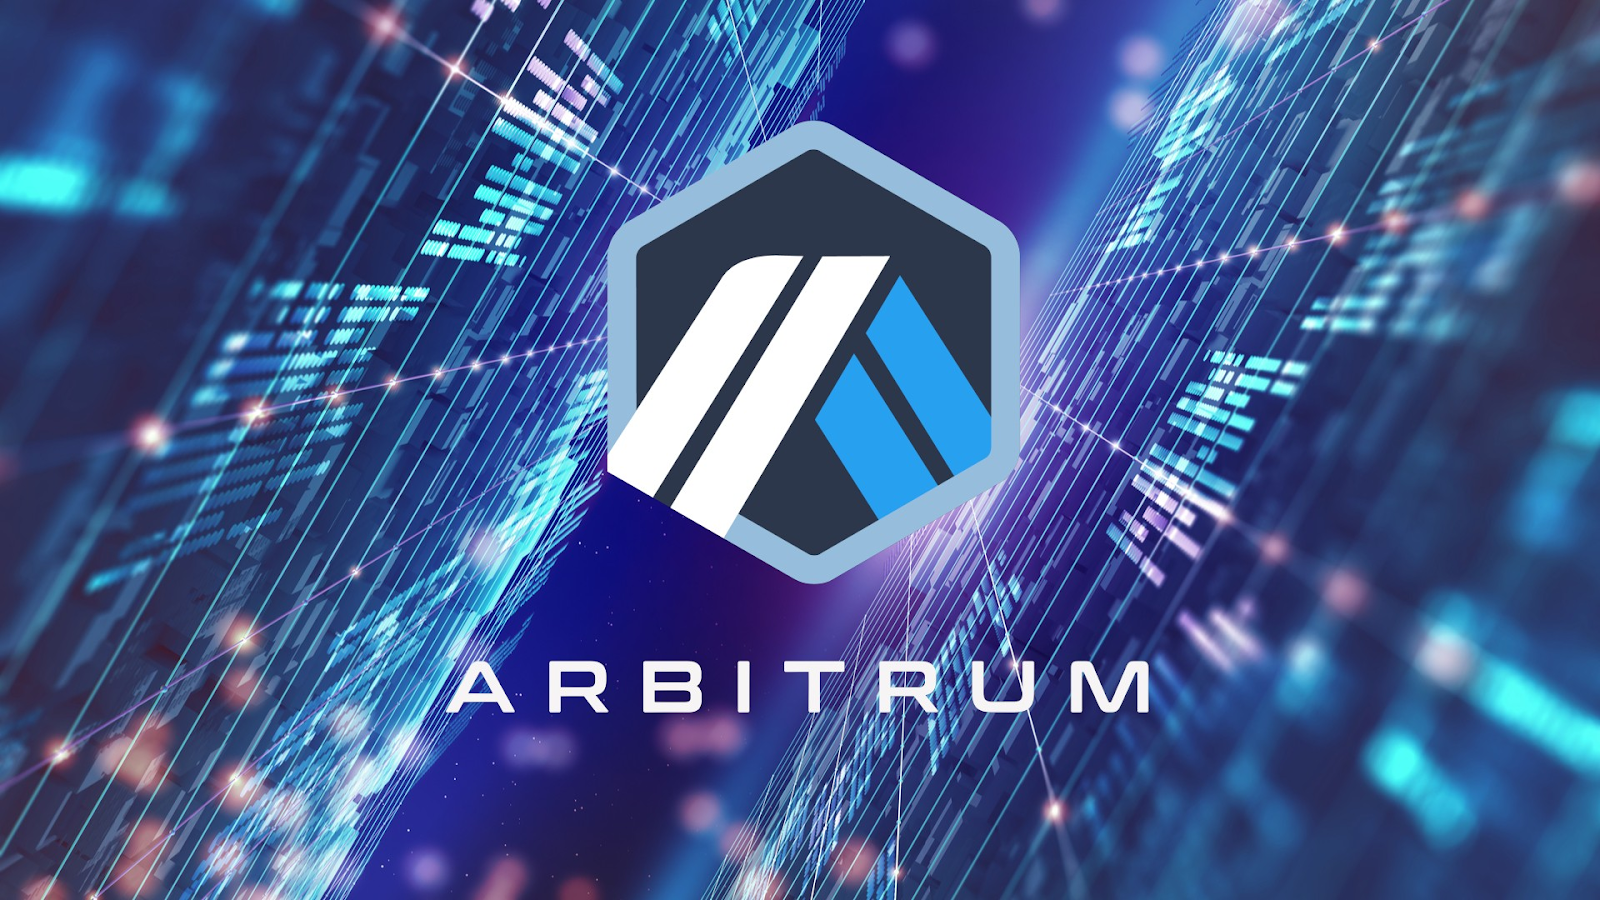 What platform will use Arbitrum?